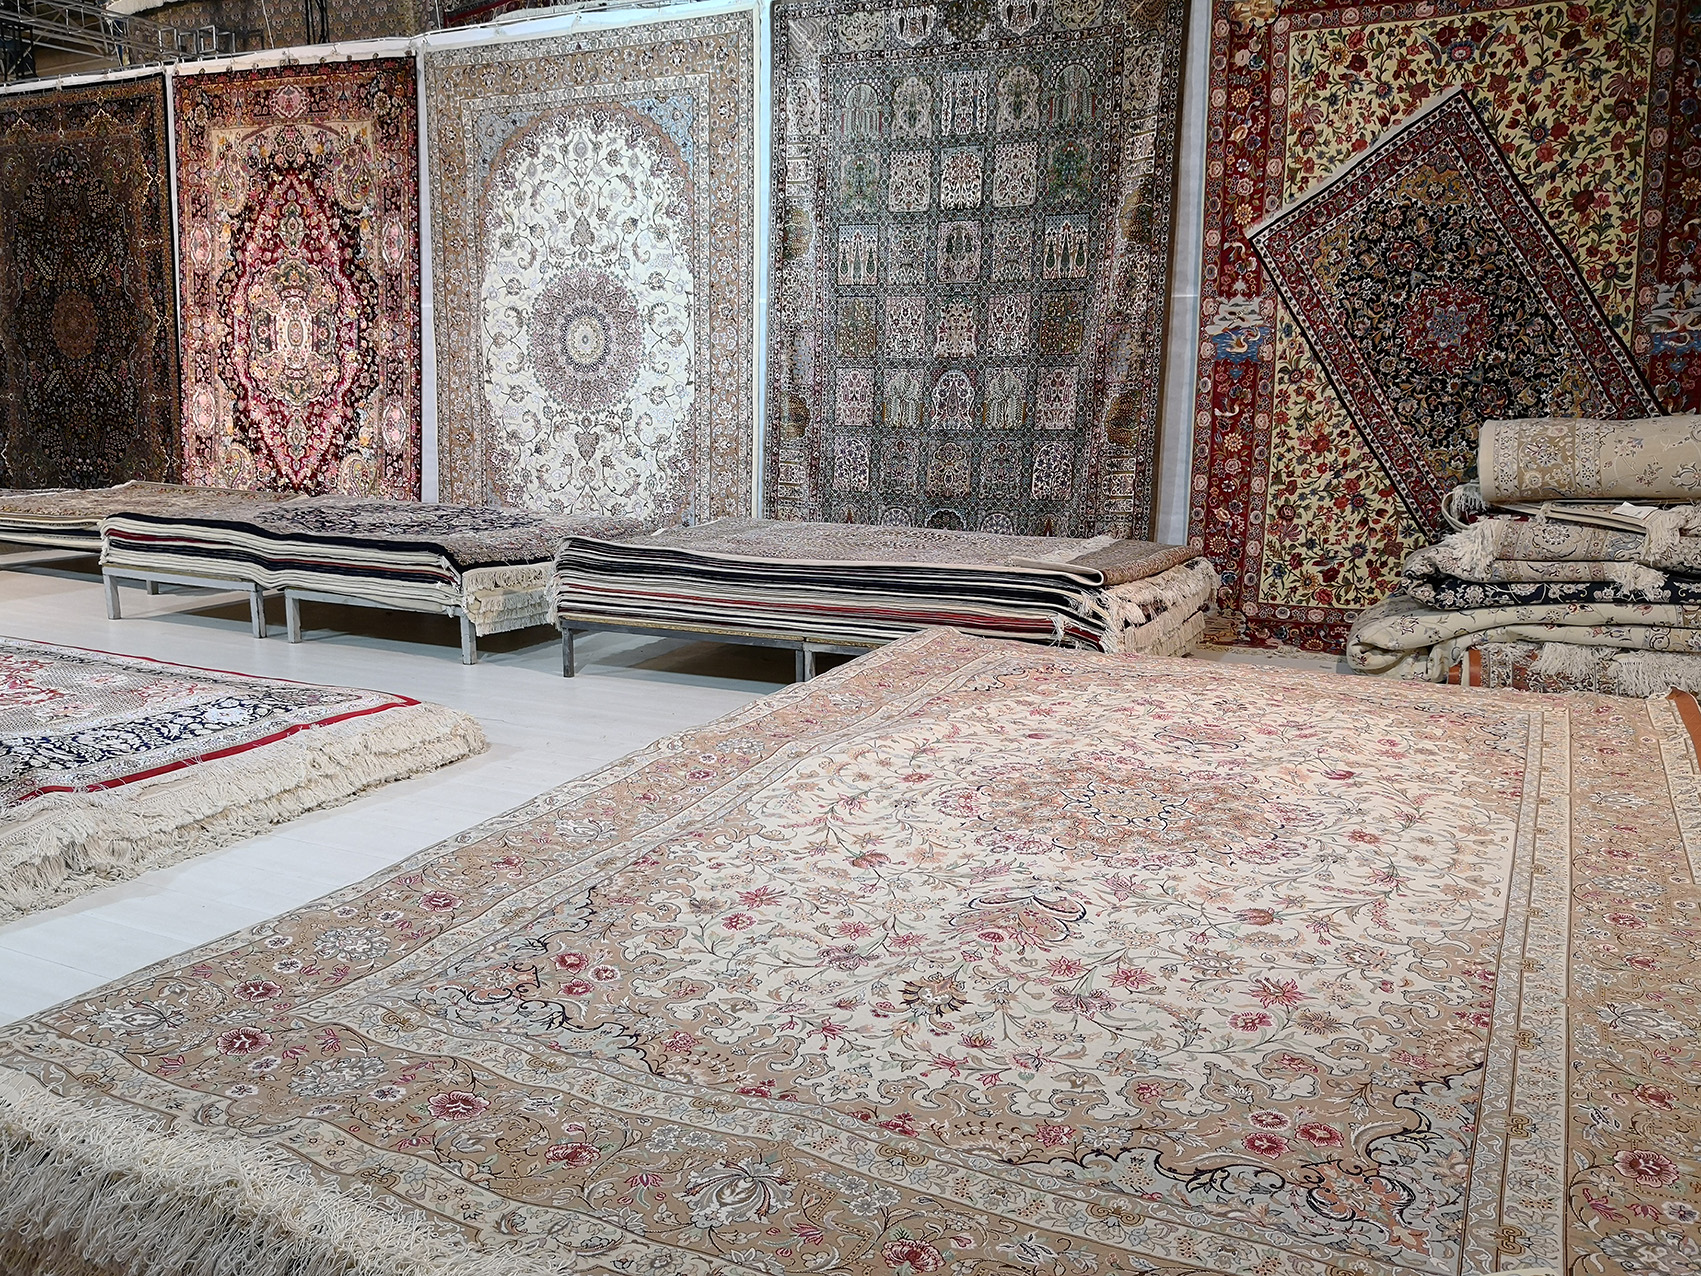 Iran Handmade Carpet Exports Rise 21%